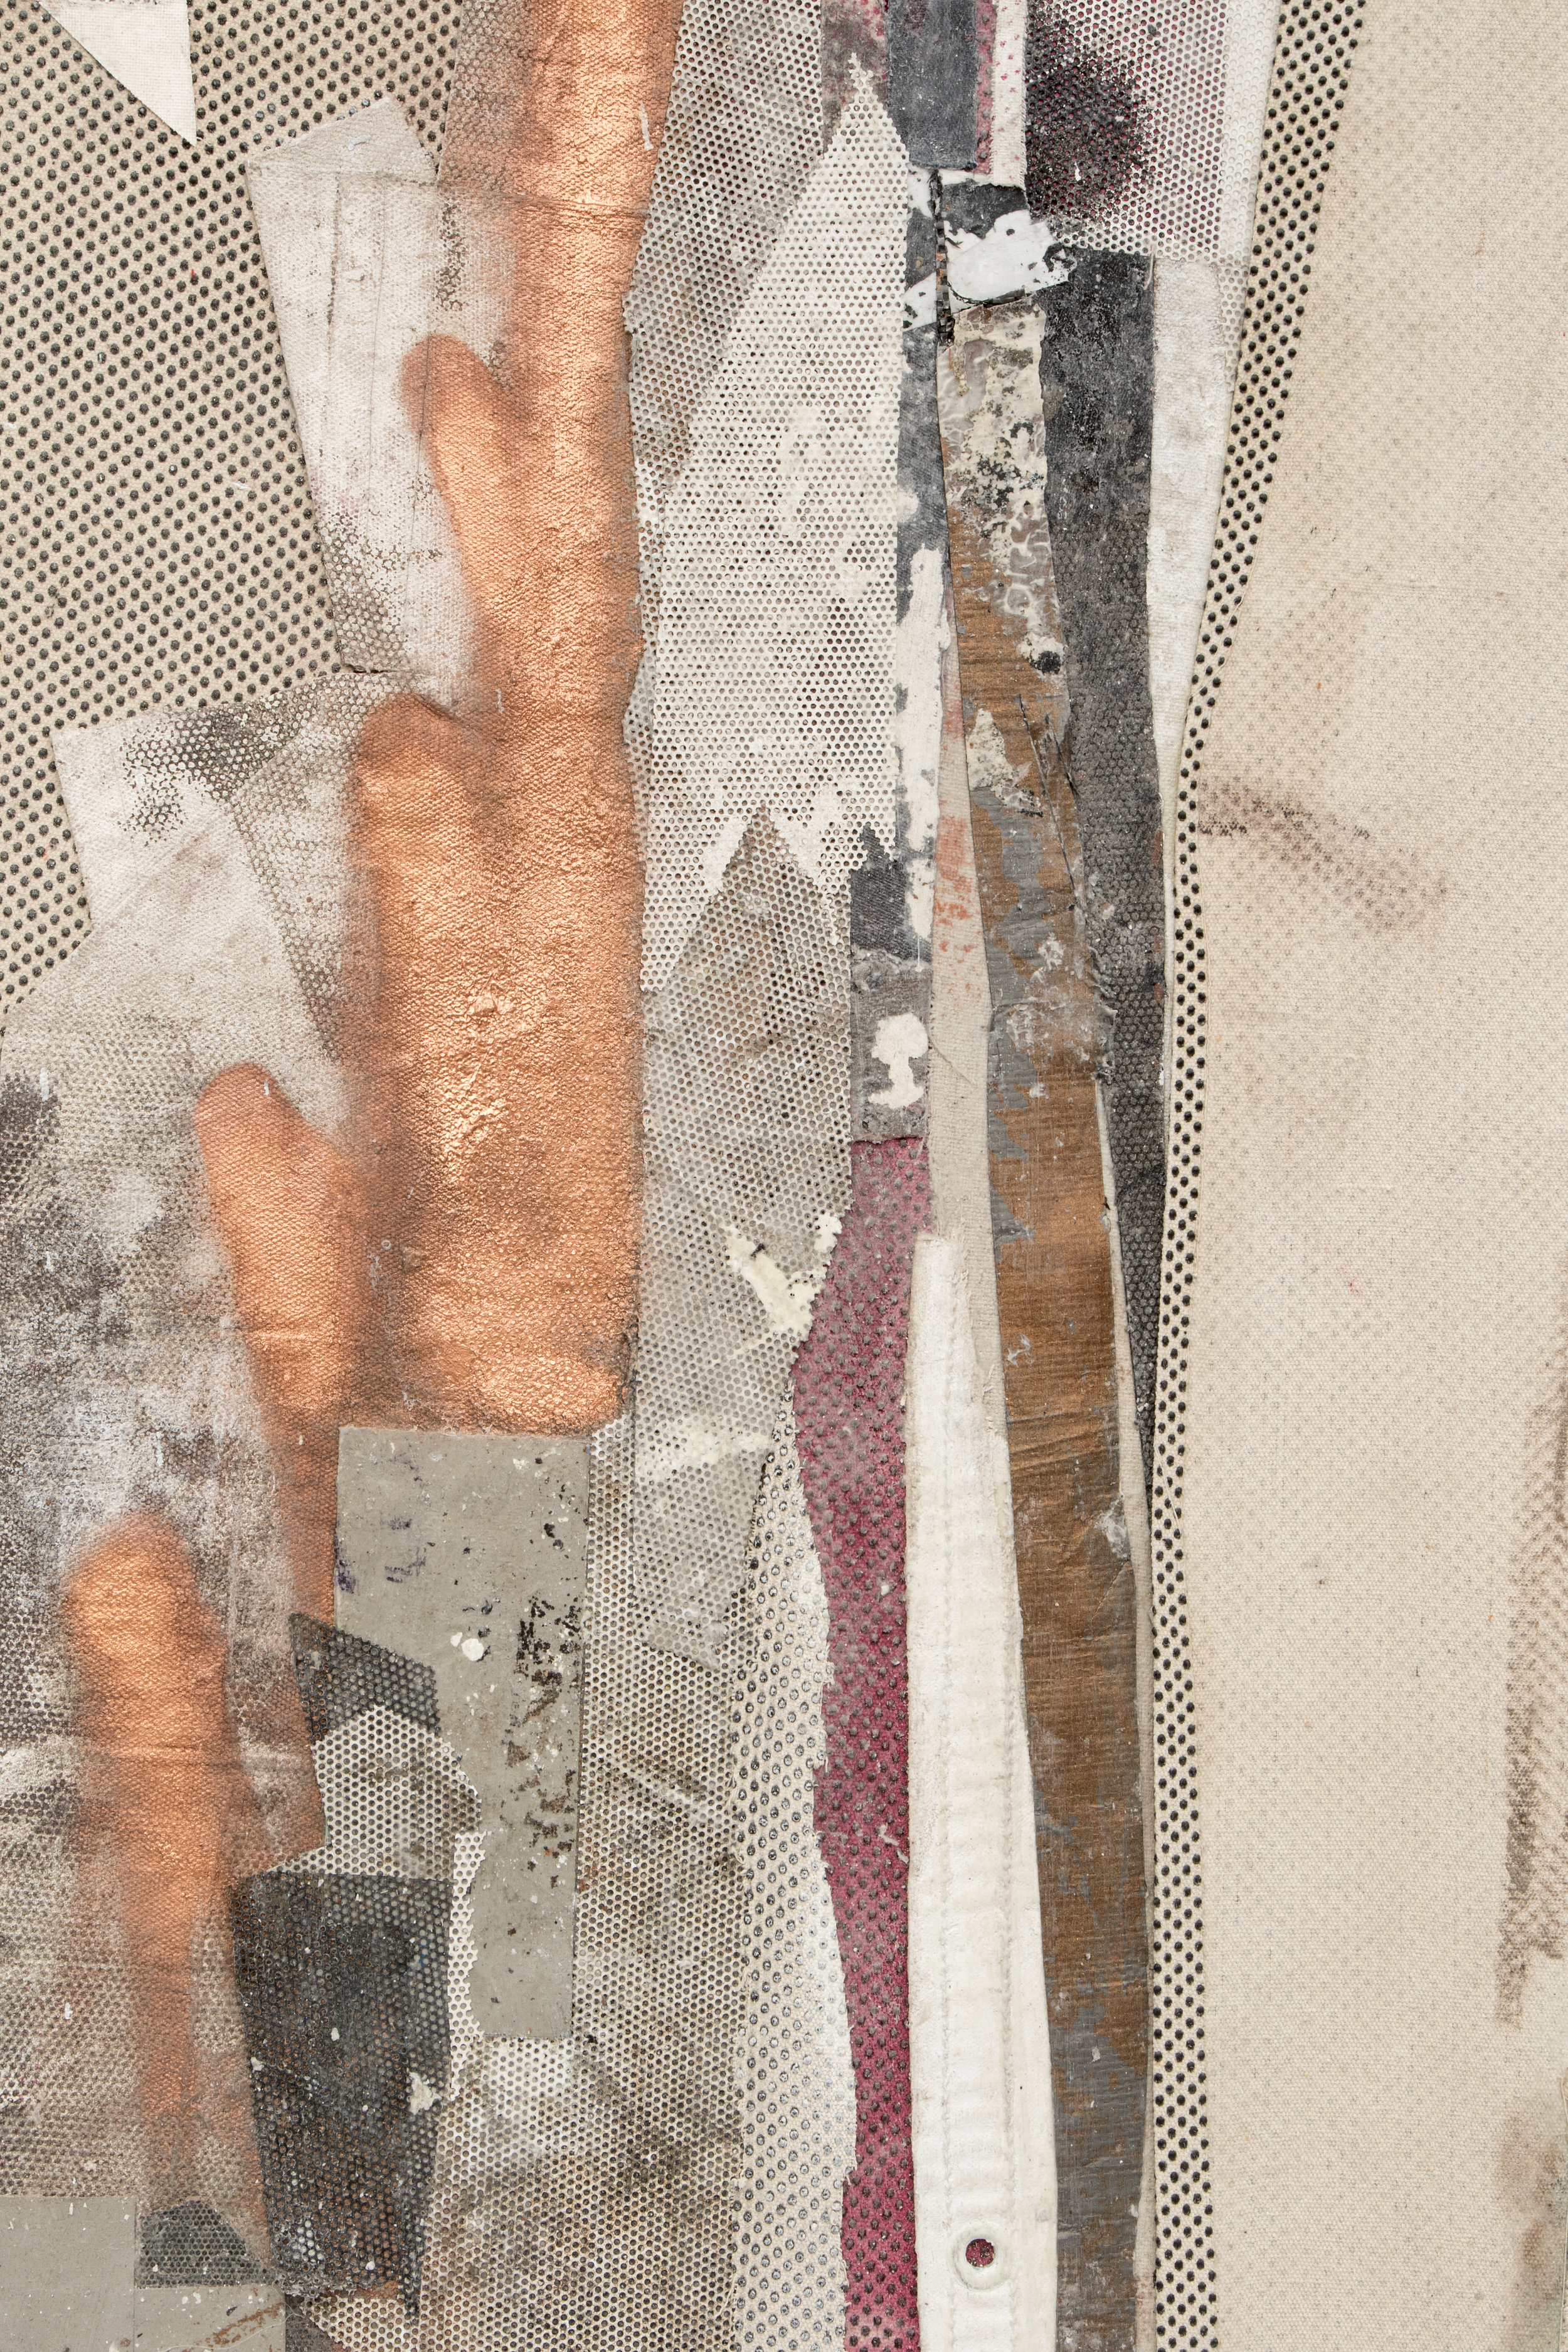   RYAN WALLACE   (detail) Redactor 5 , 2015, enamel, acrylic, vinyl, rubber, concrete, plaster, aluminum tape, canvas on canvas, 72" x 60" 